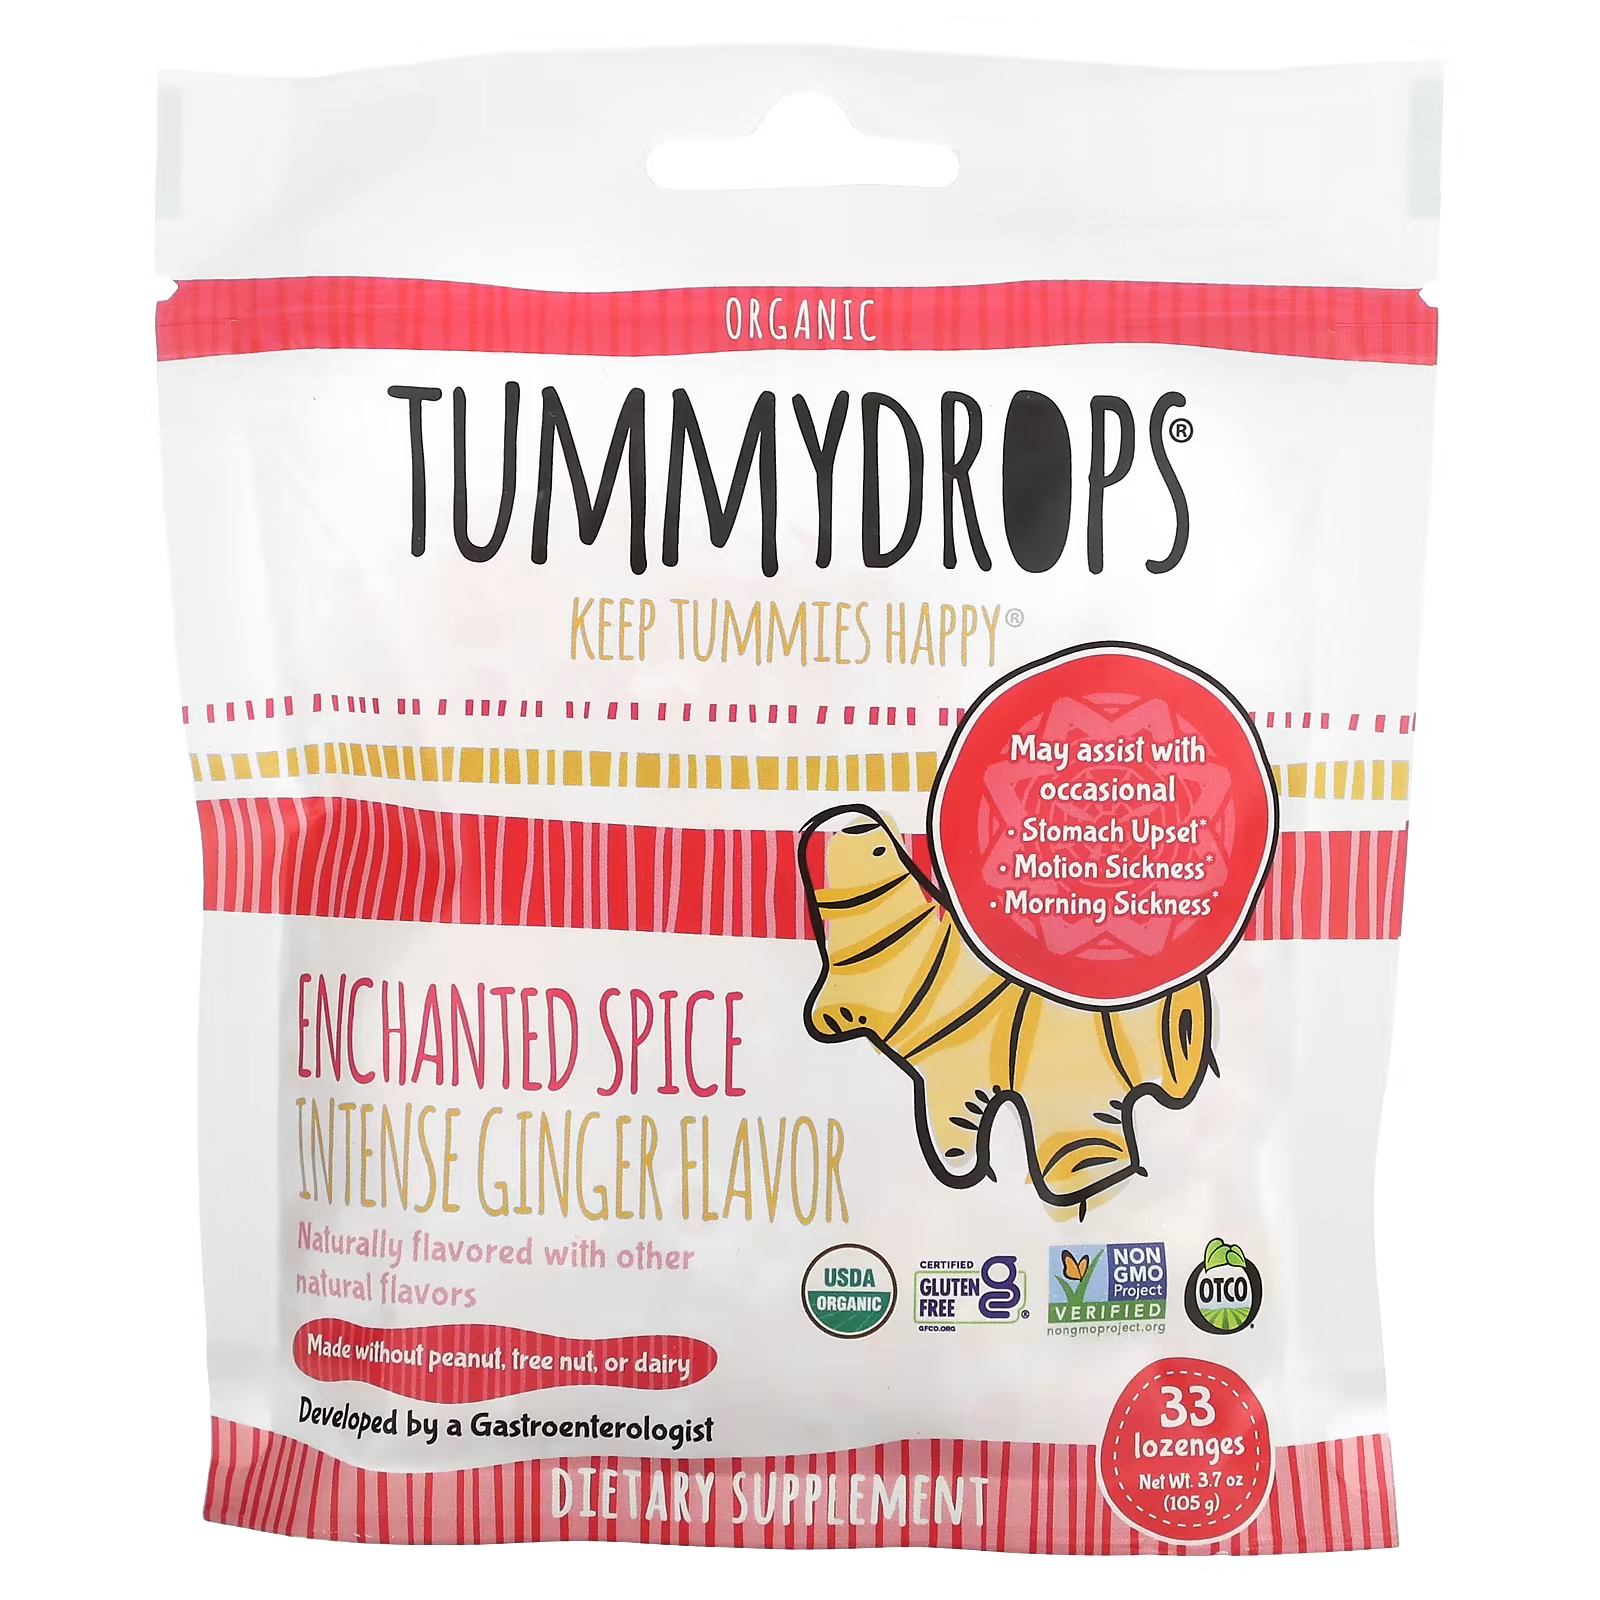 Пищевая добавка Tummydrops Organic Enchanted Spice Intense Ginger, 33 пастилки tummydrops органические капли для живота клубника и имбирь 33 пастилки